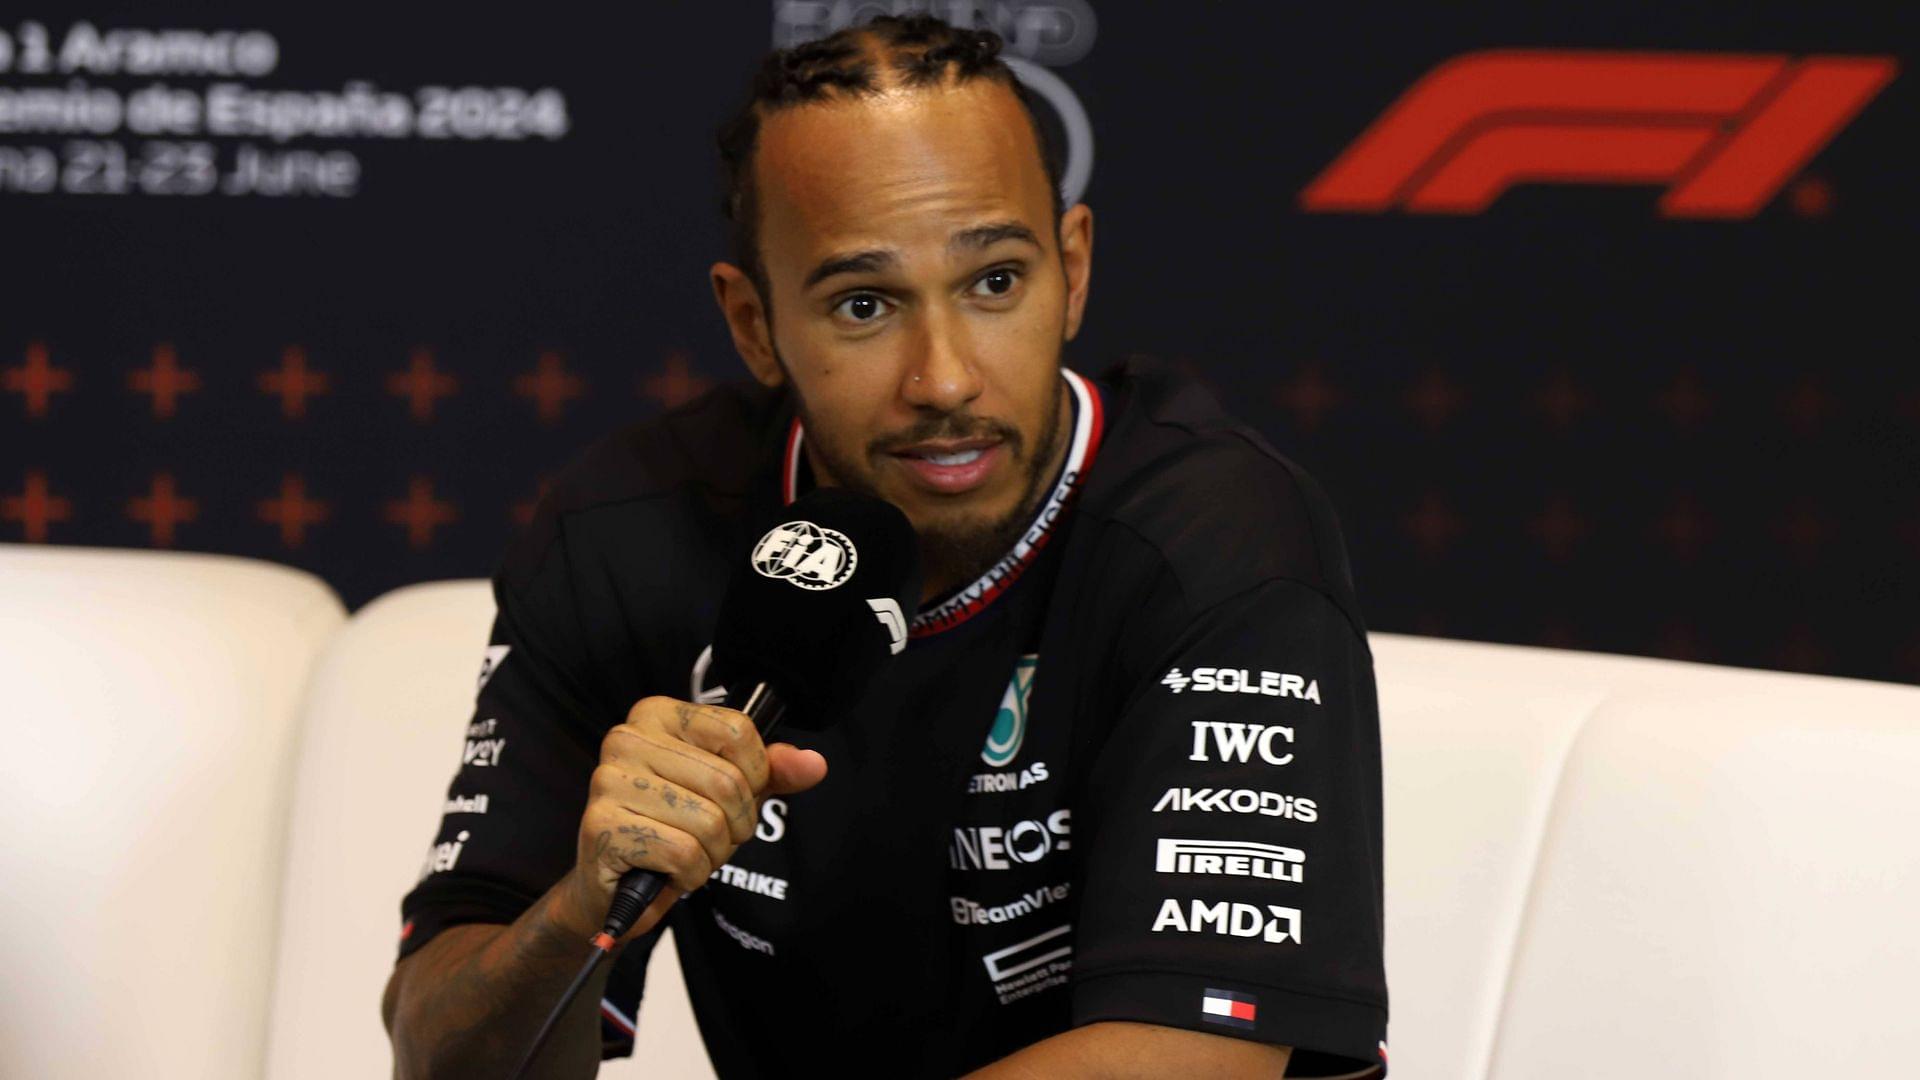 Lewis Hamilton ‘Denies’ Having Second Thoughts About Ferrari Move After Mercedes’ Impressive Performances